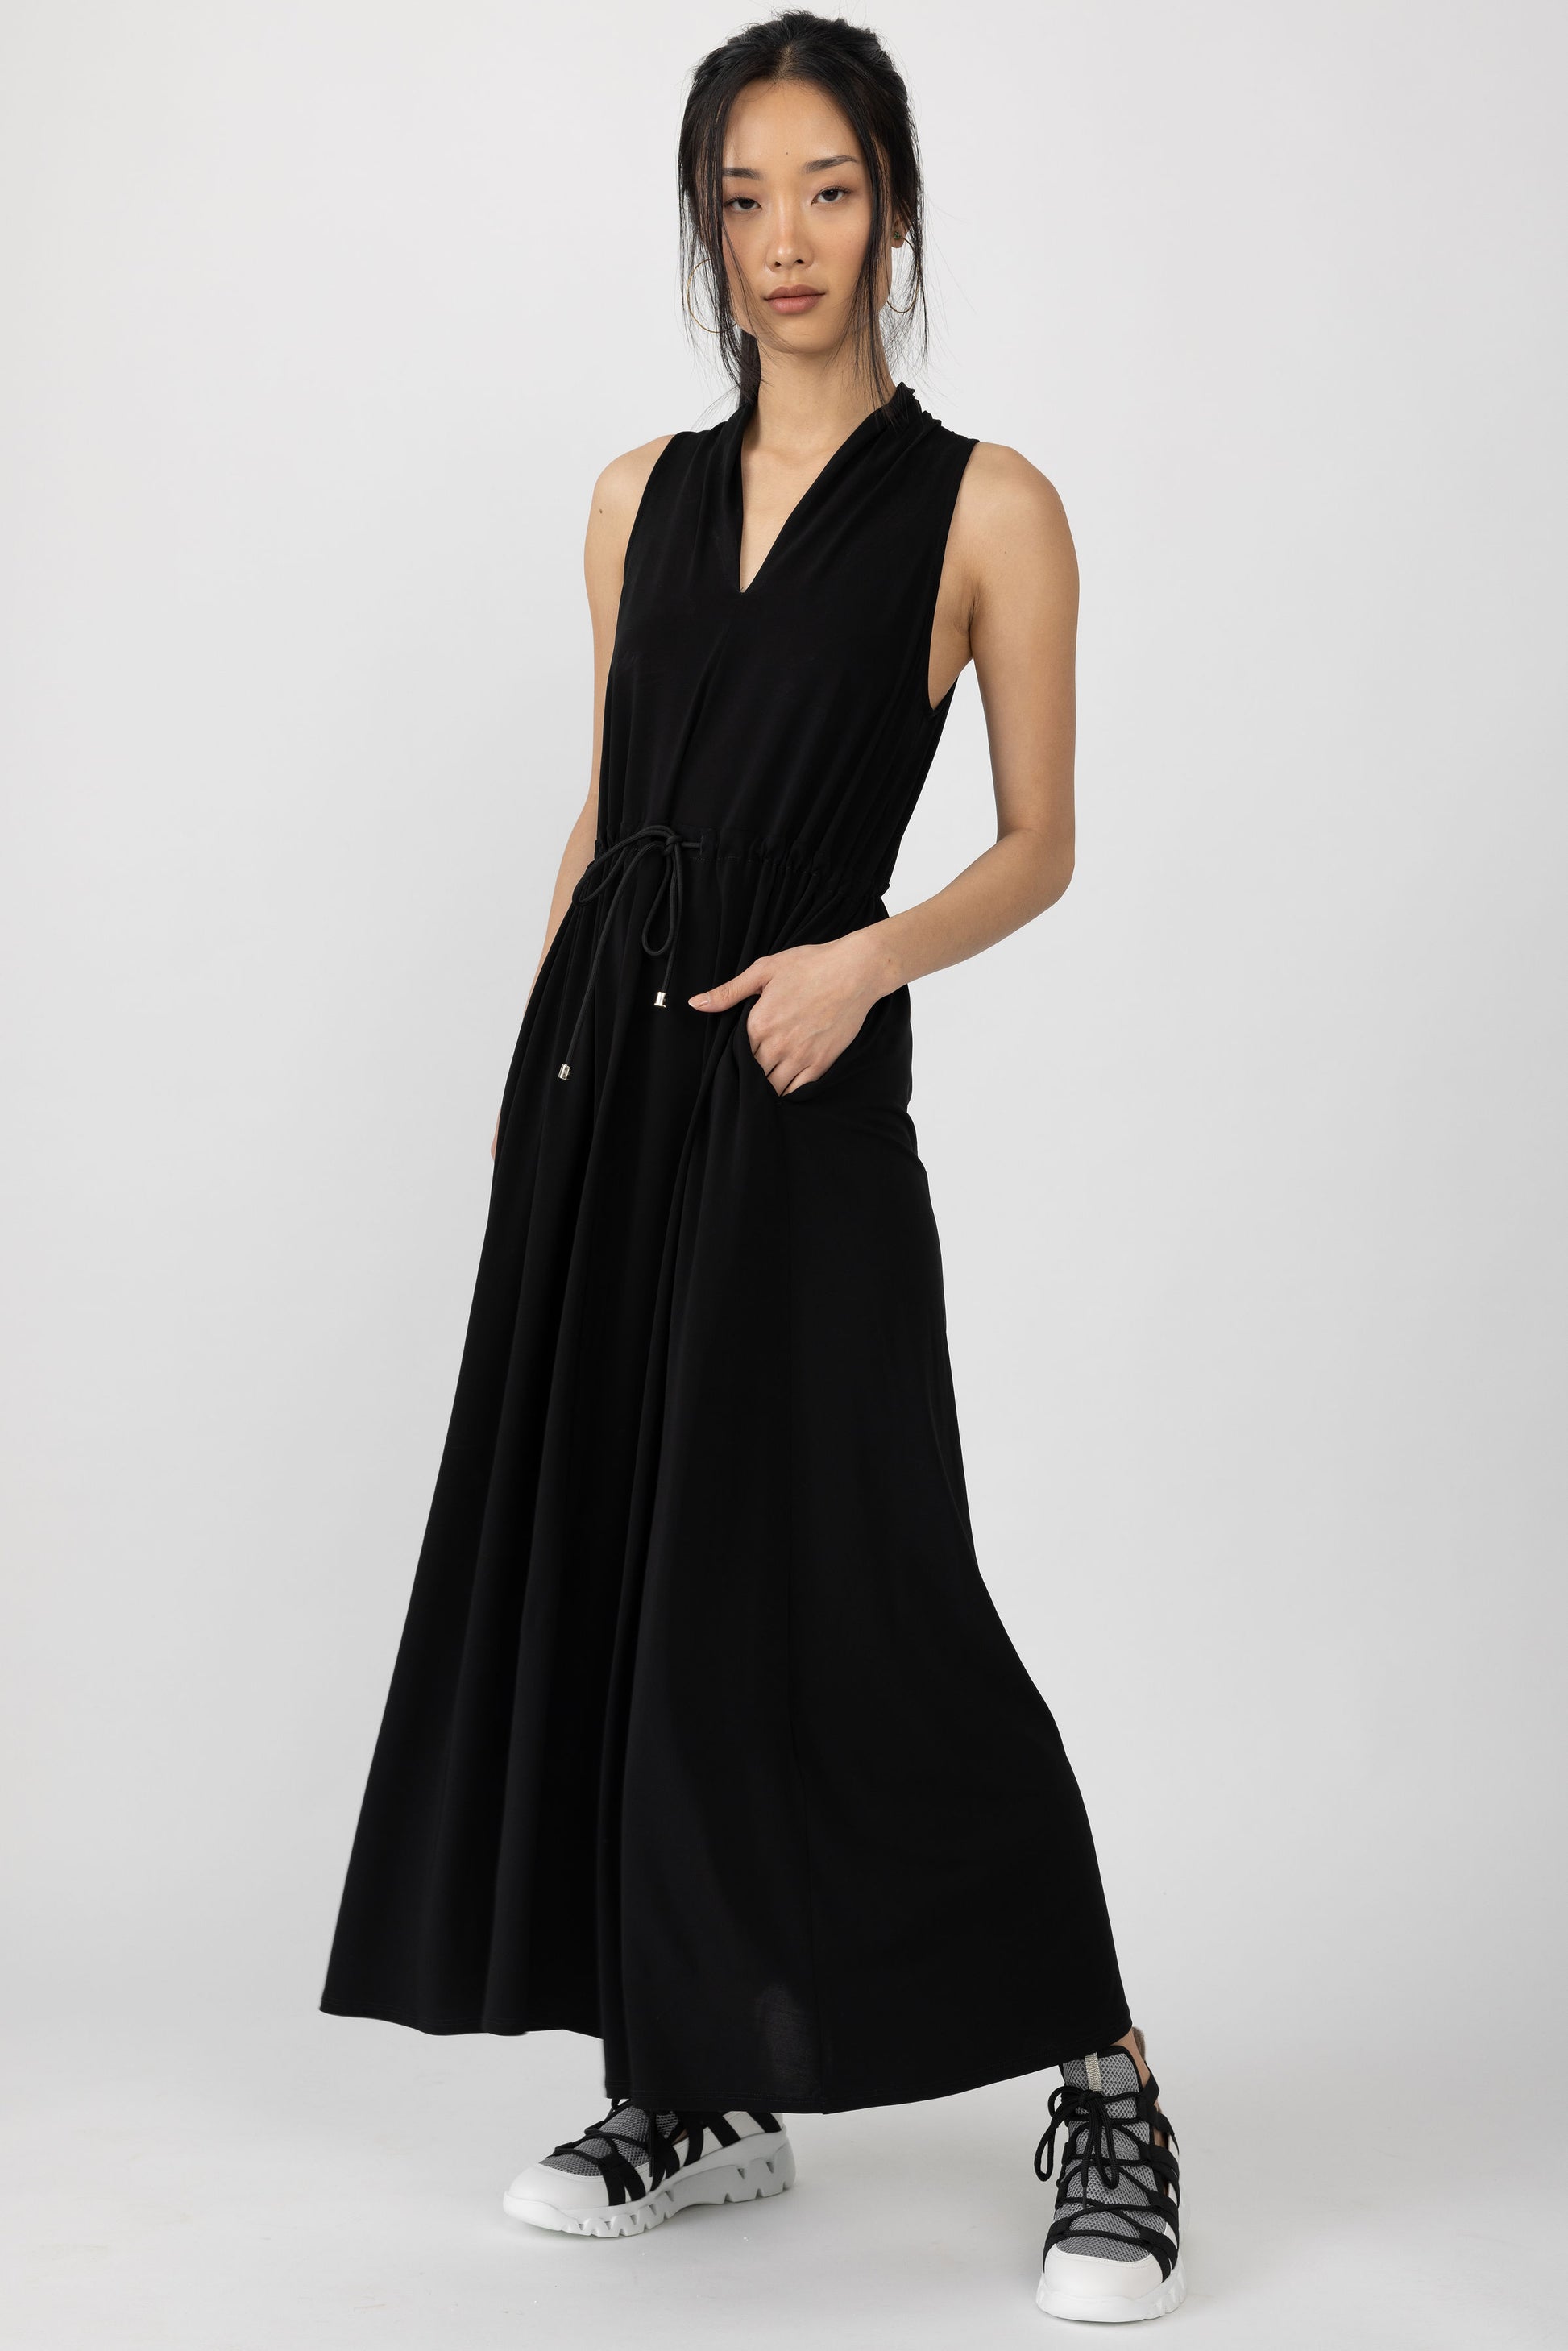 MAX MARA LEISURE Zitto Knit Jersey Dress in Black